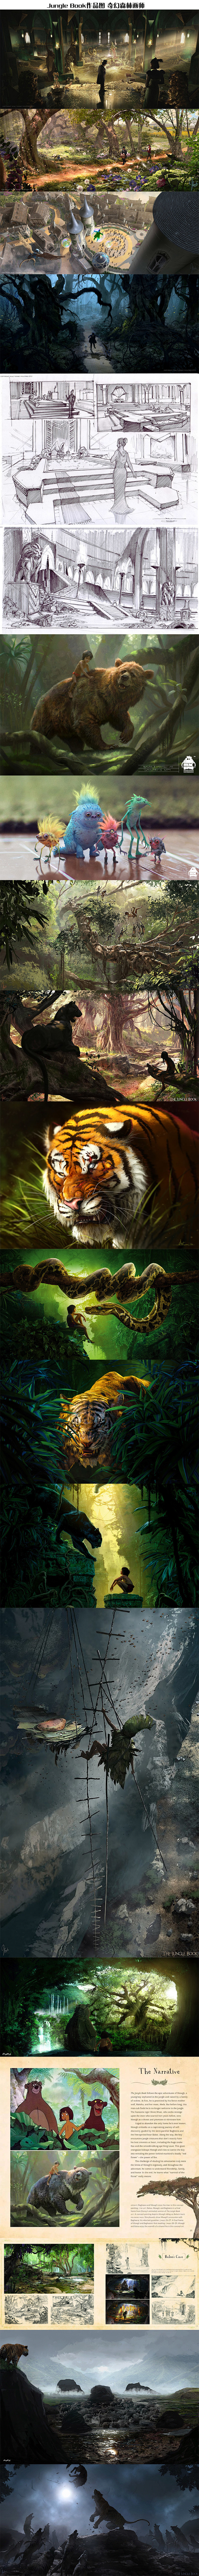 奇幻森林The Jungle Book作...